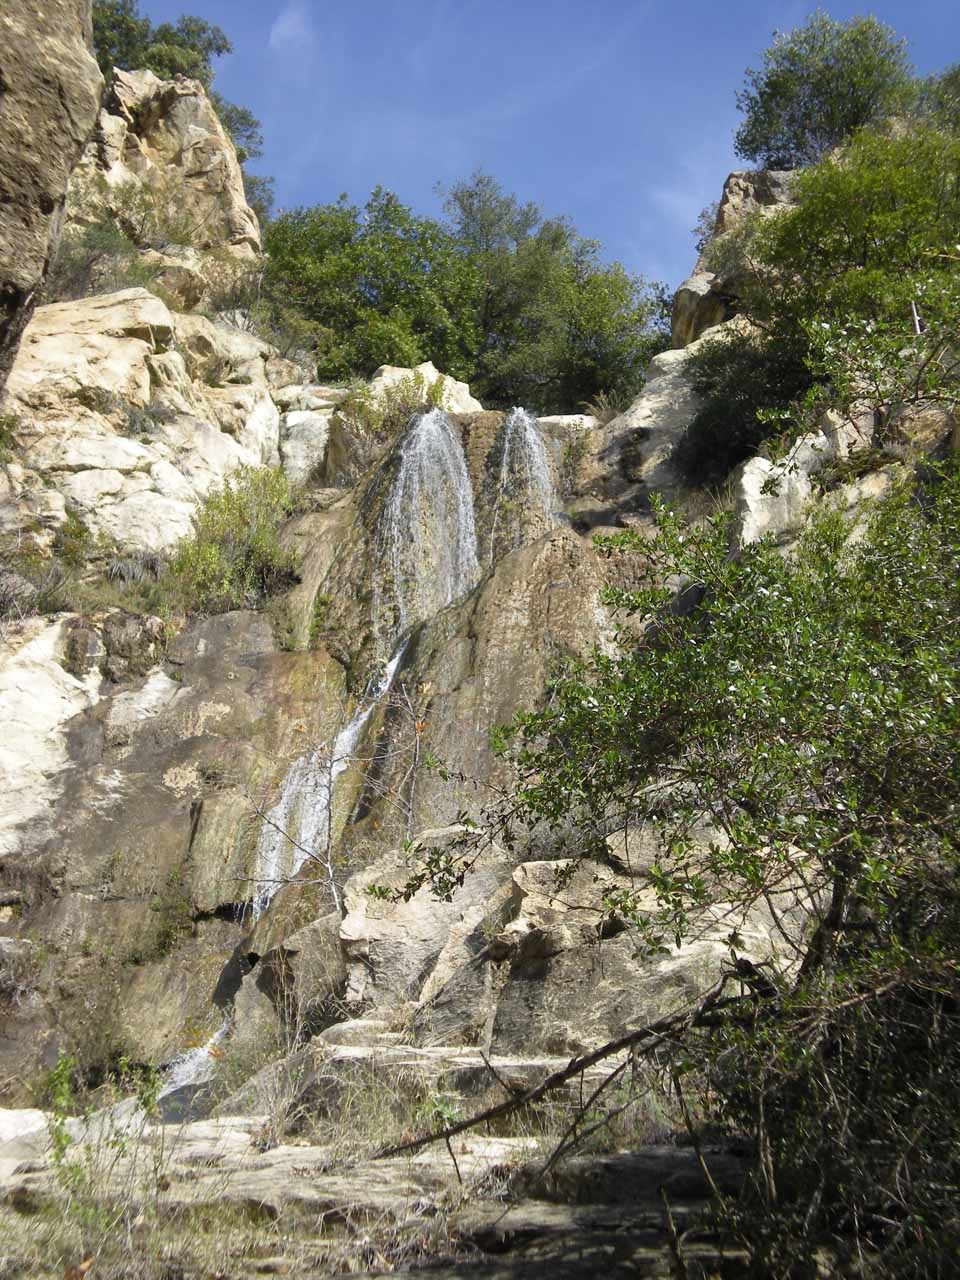 Tangerine Falls - A Santa Barbara 'Locals Only' Waterfall